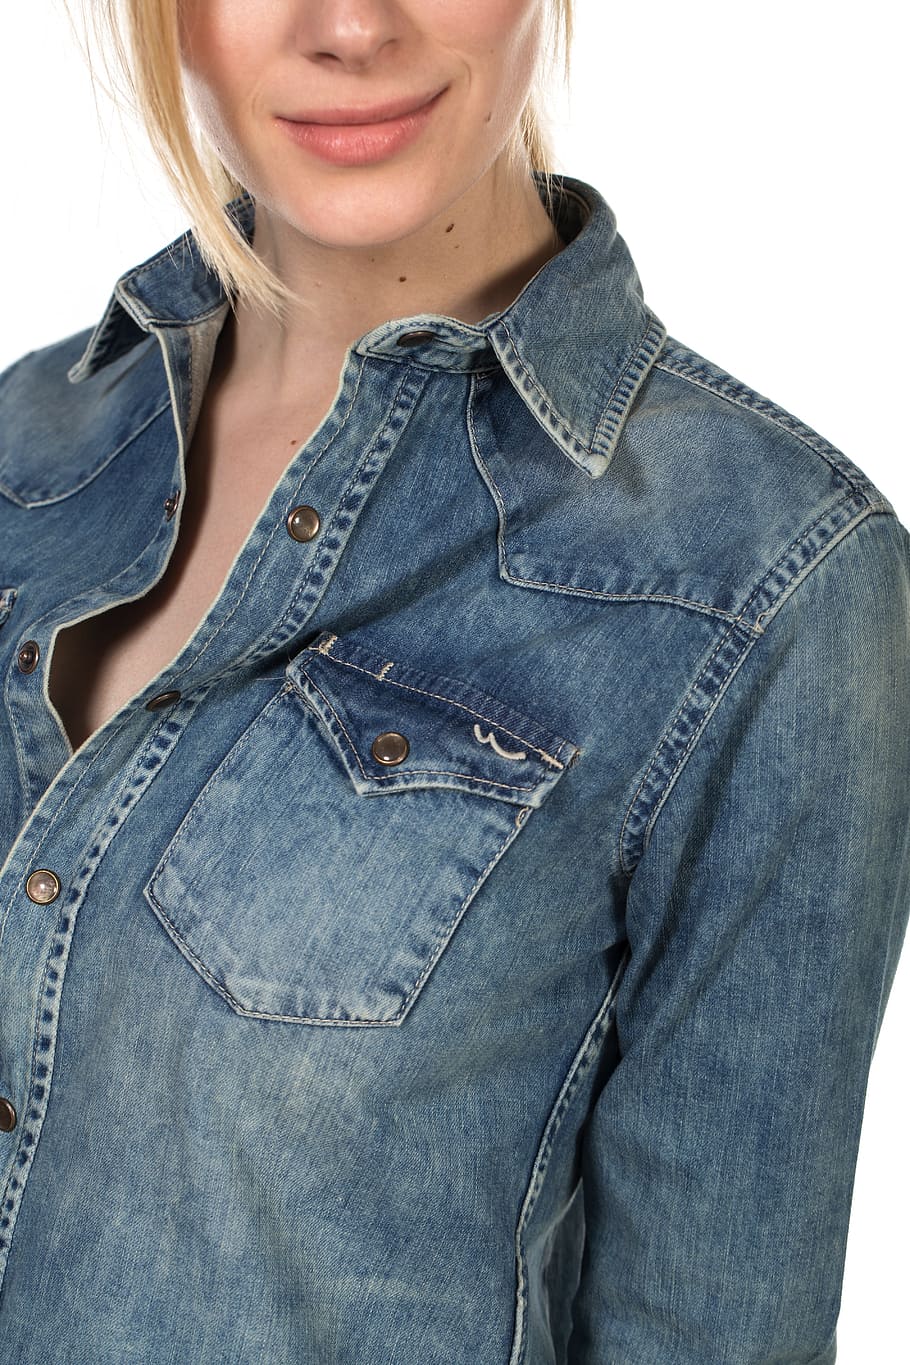 woman, wearing, blue, denim button-up jacket, Model, Fashion, Clothes, Style, Genre, exposure